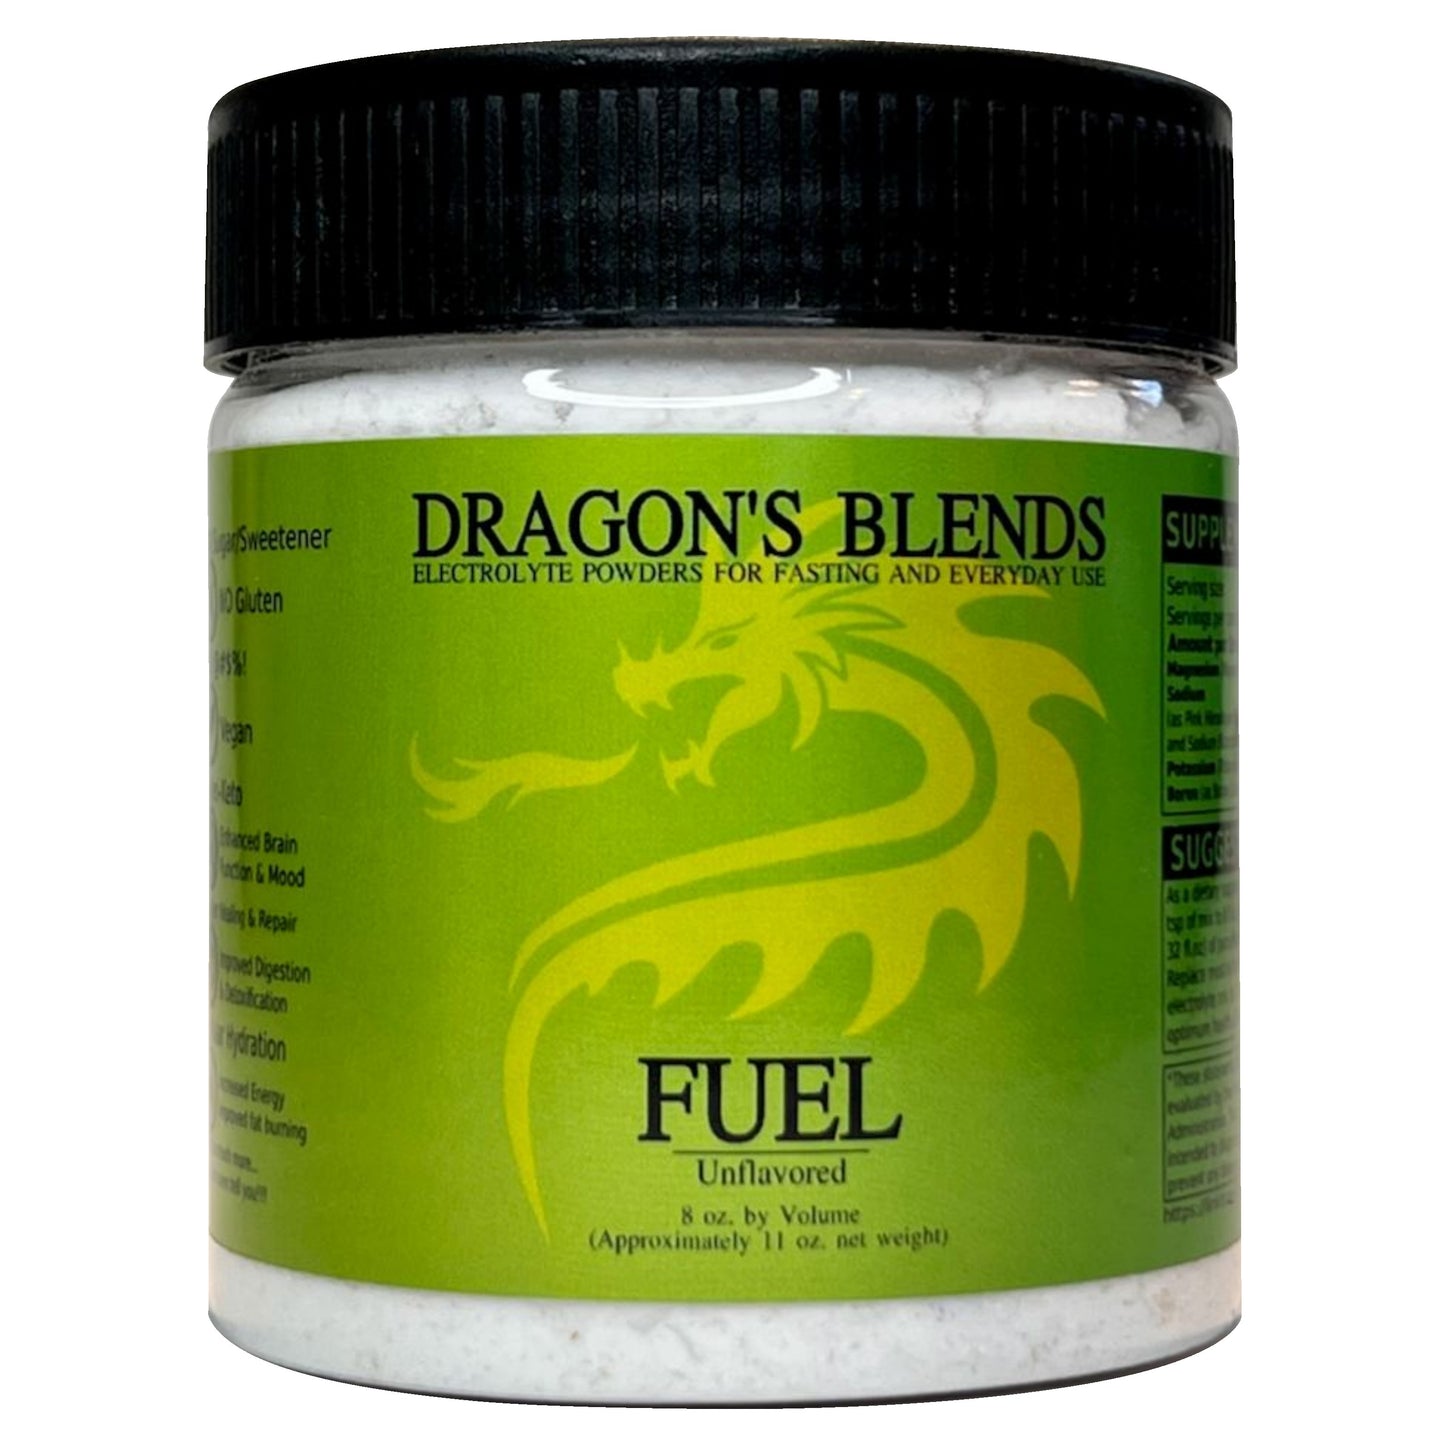 Dragon's Fuel